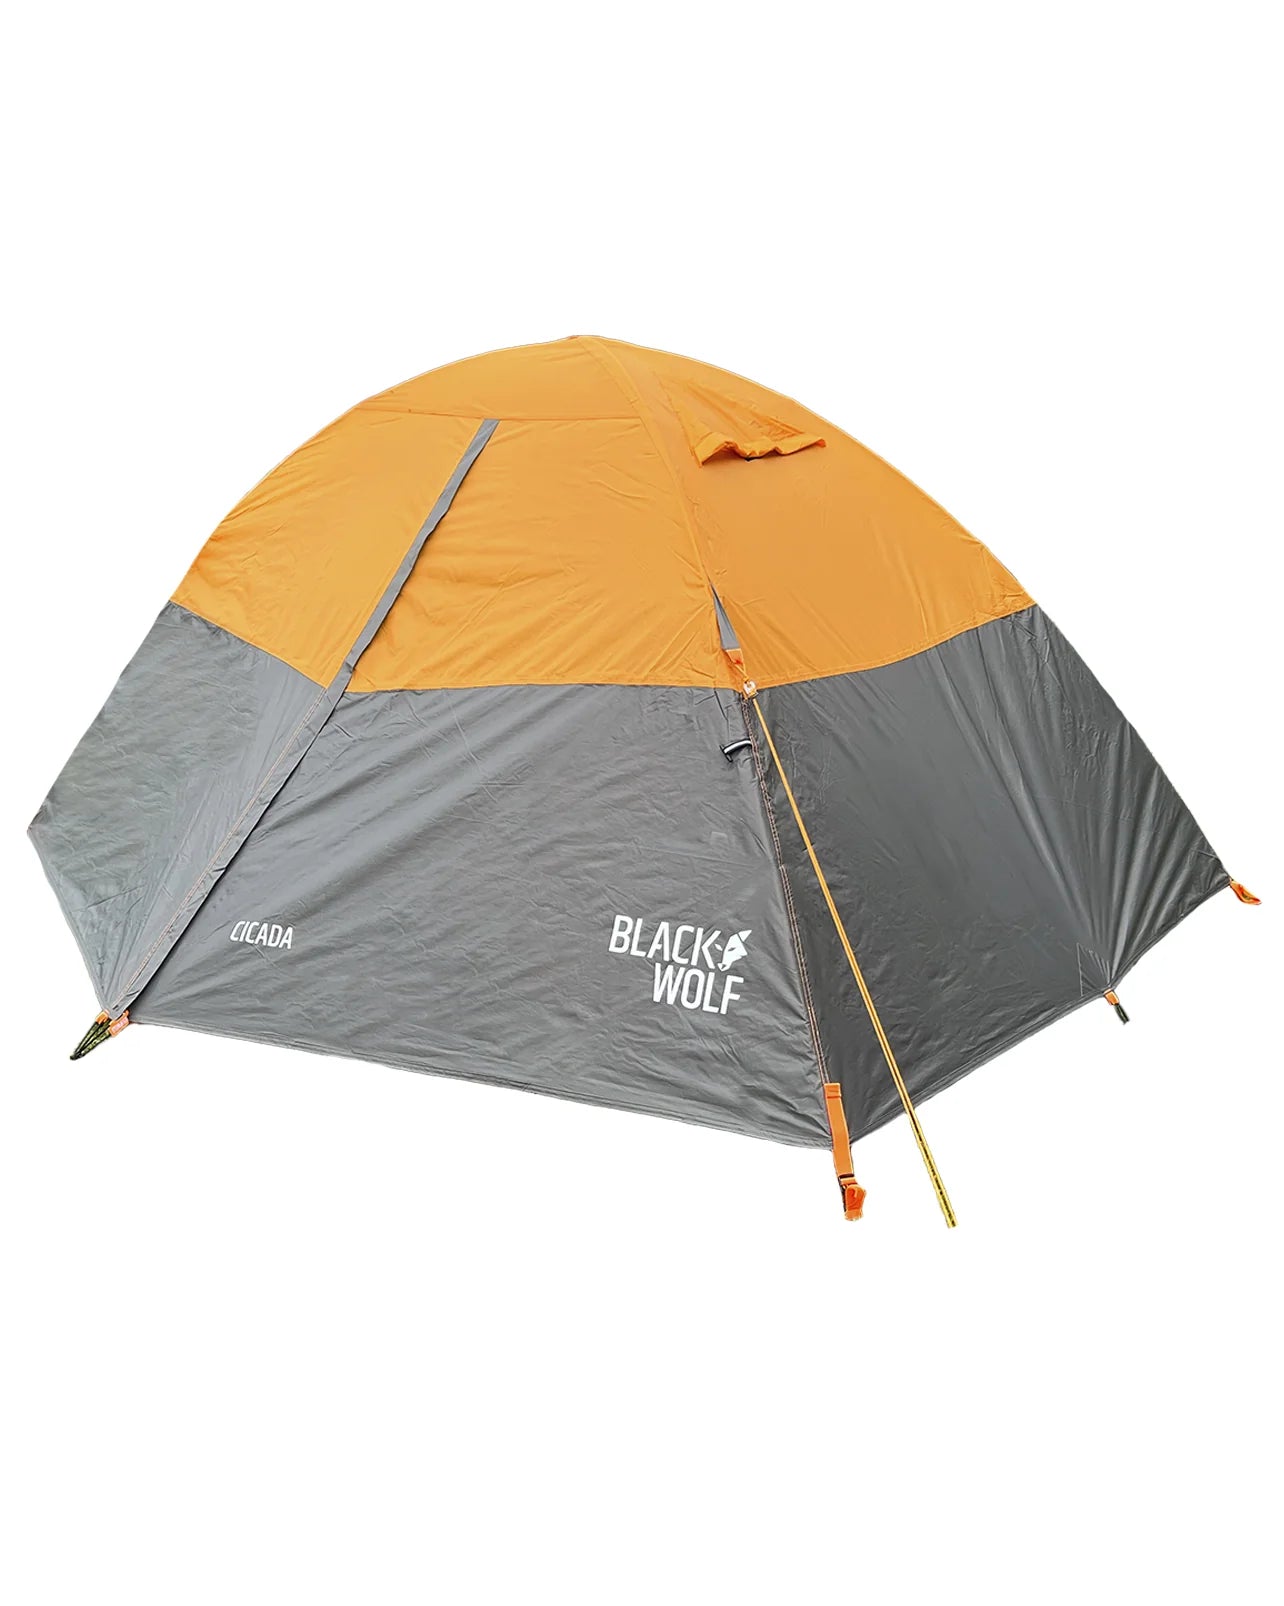 BlackWolf Cicada Hiking Tent - 2 Person